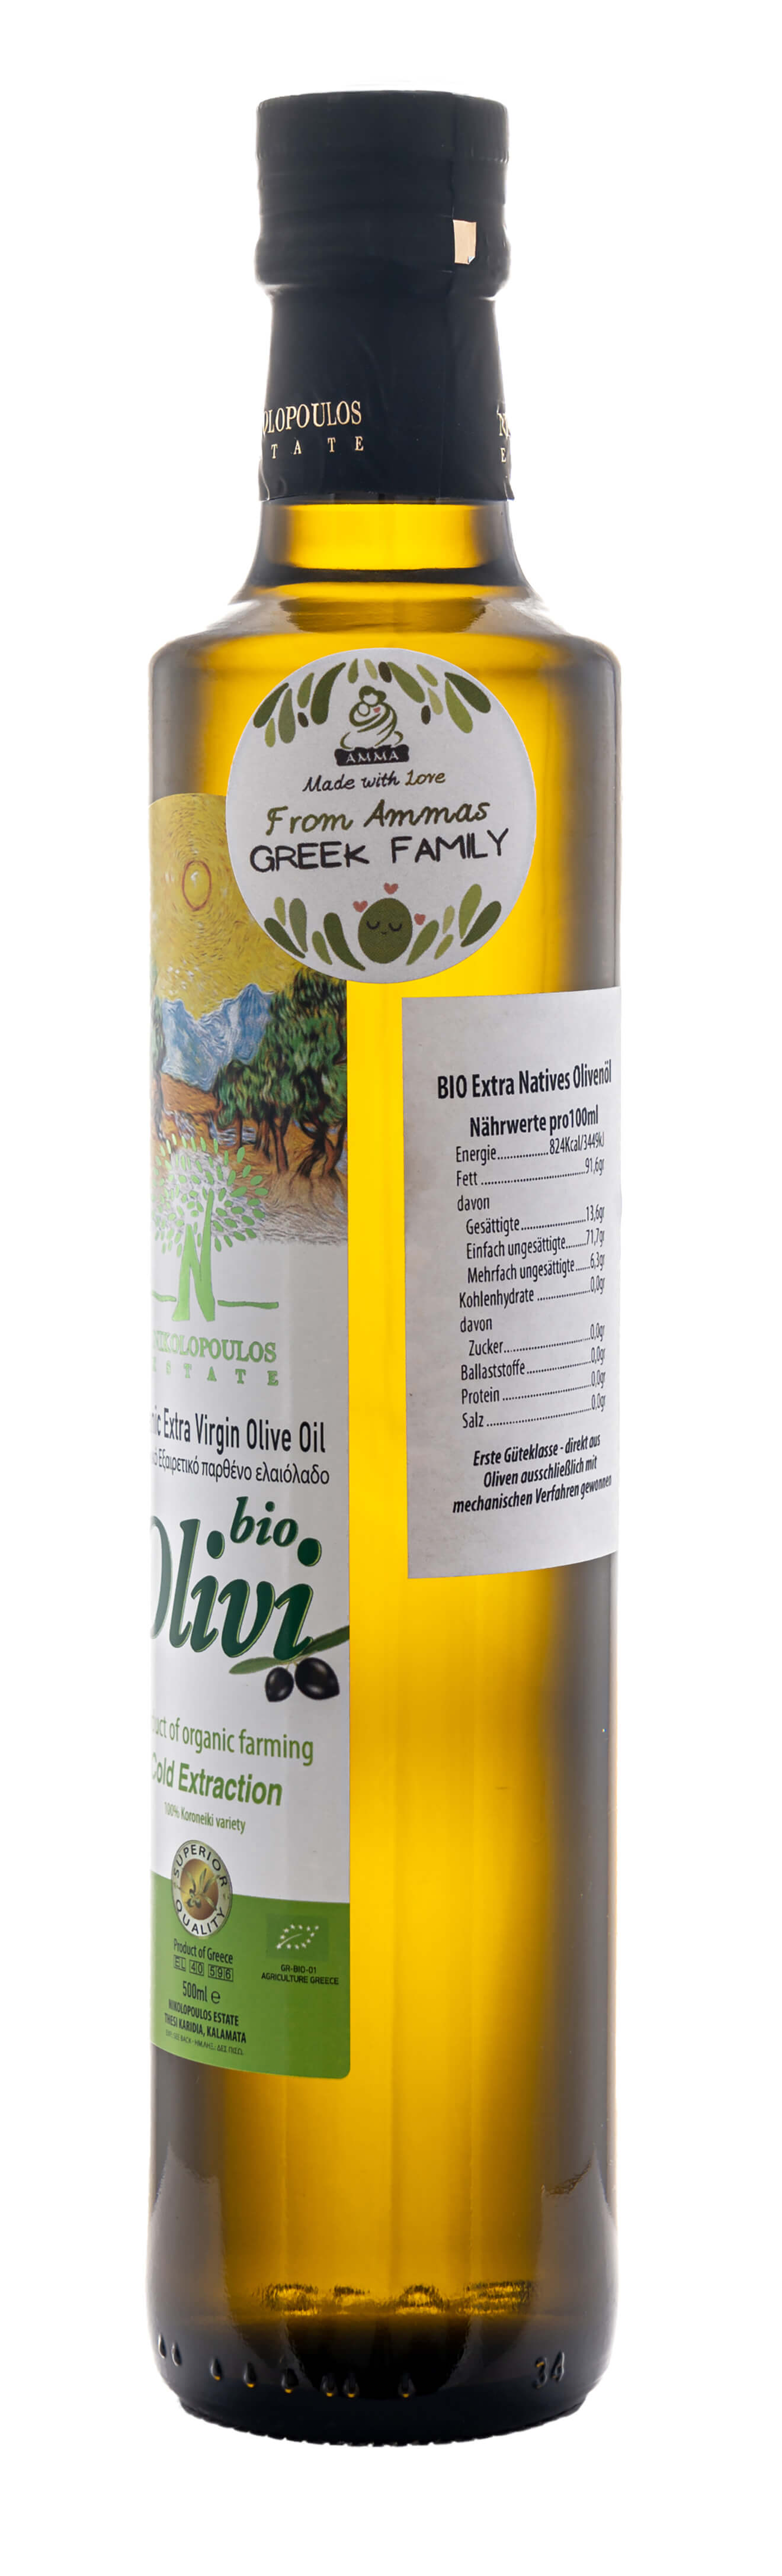 Olivi - Greek Organic Native Olive Oil Extra - 0,5L